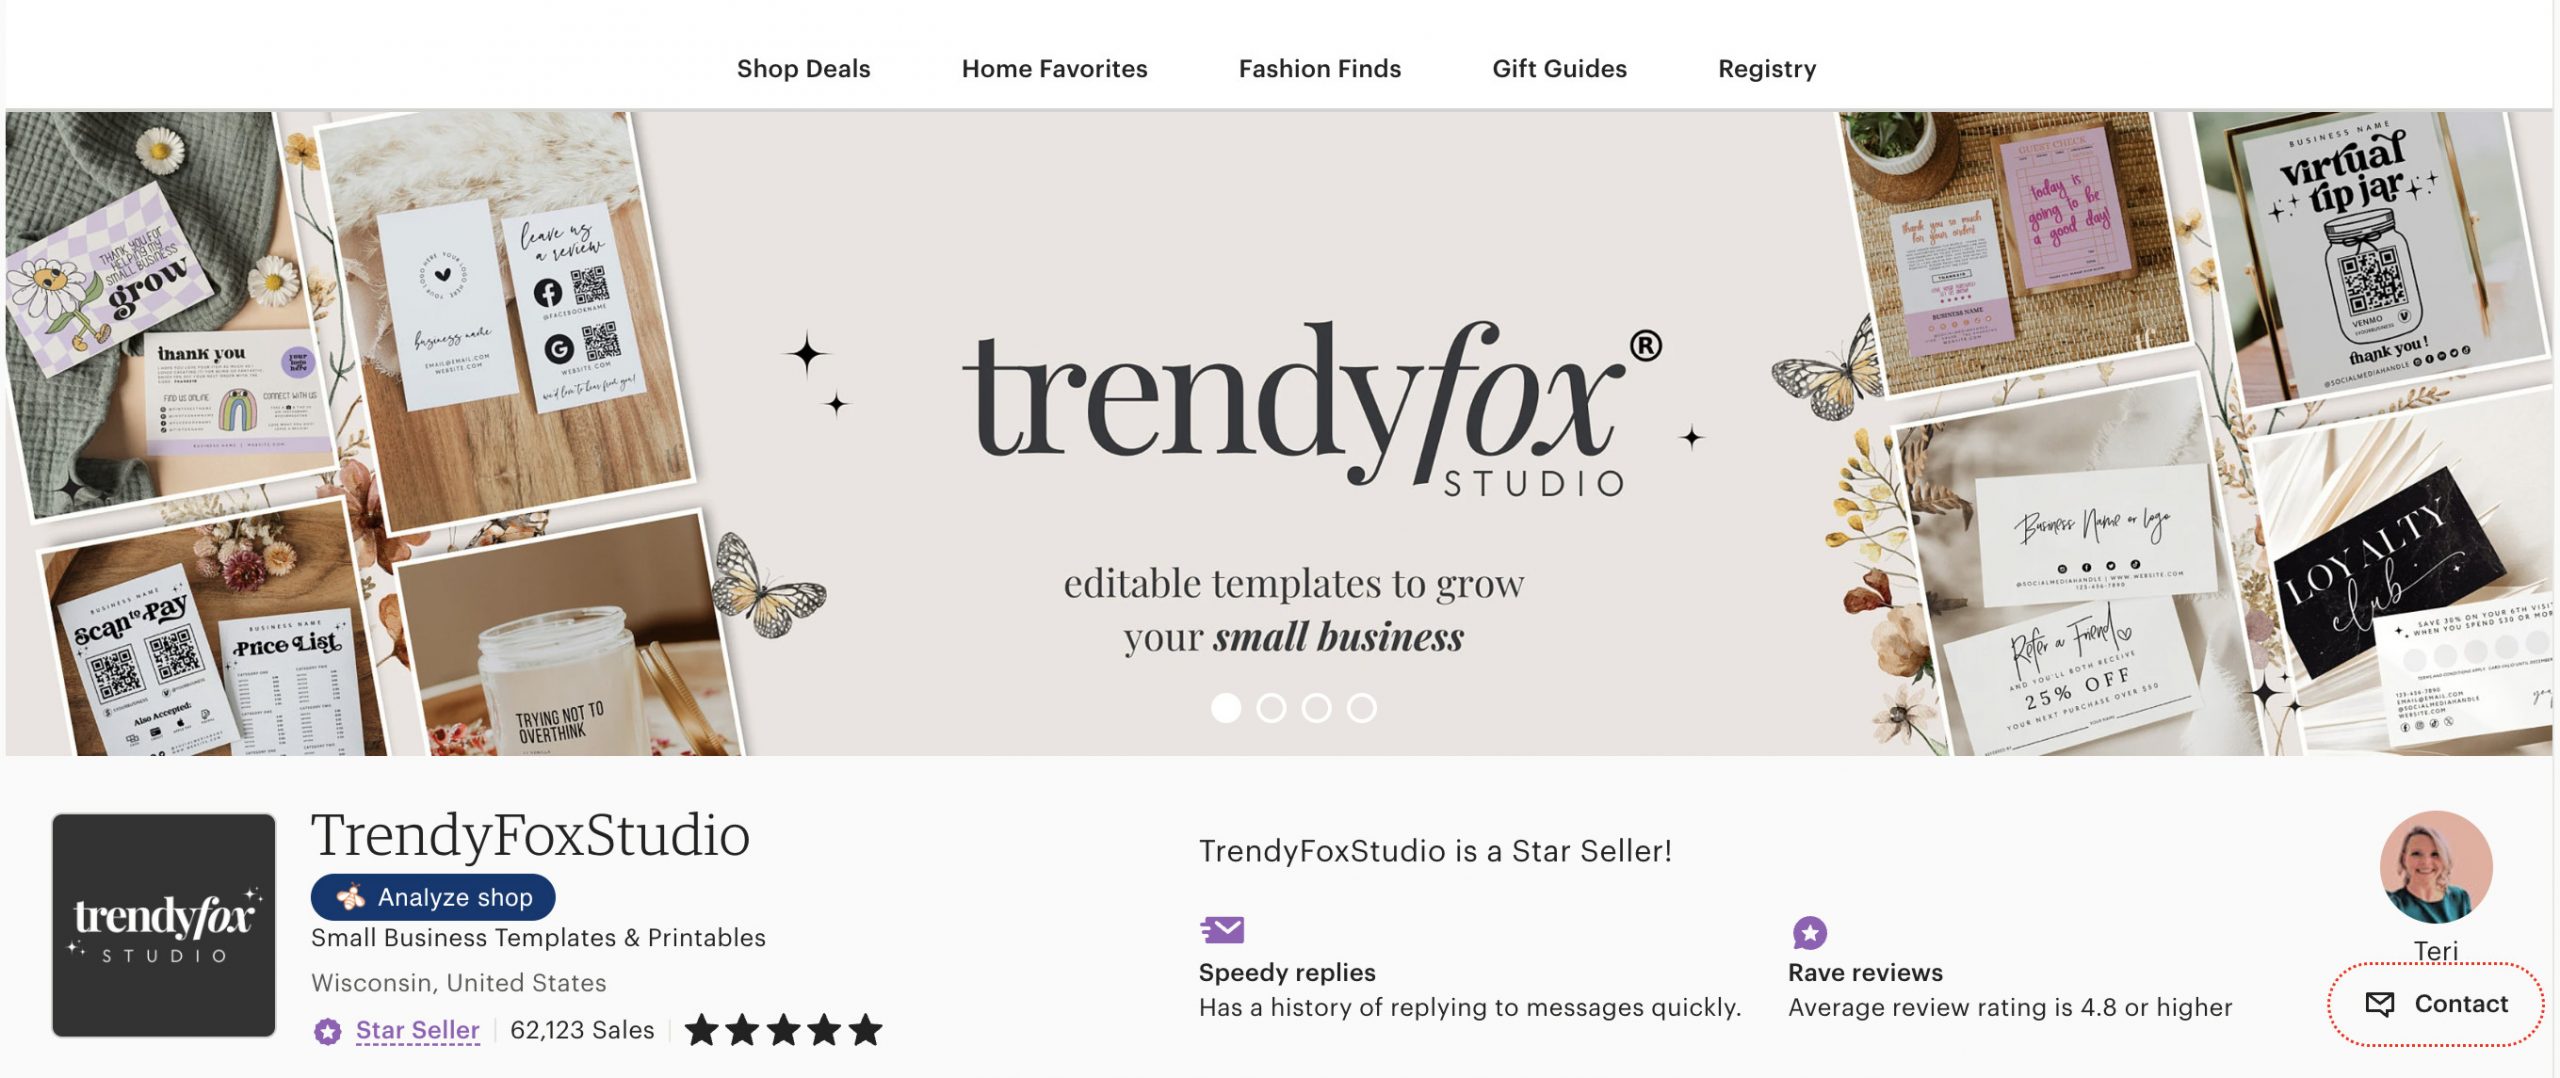 Trendy Fox Studio business card store